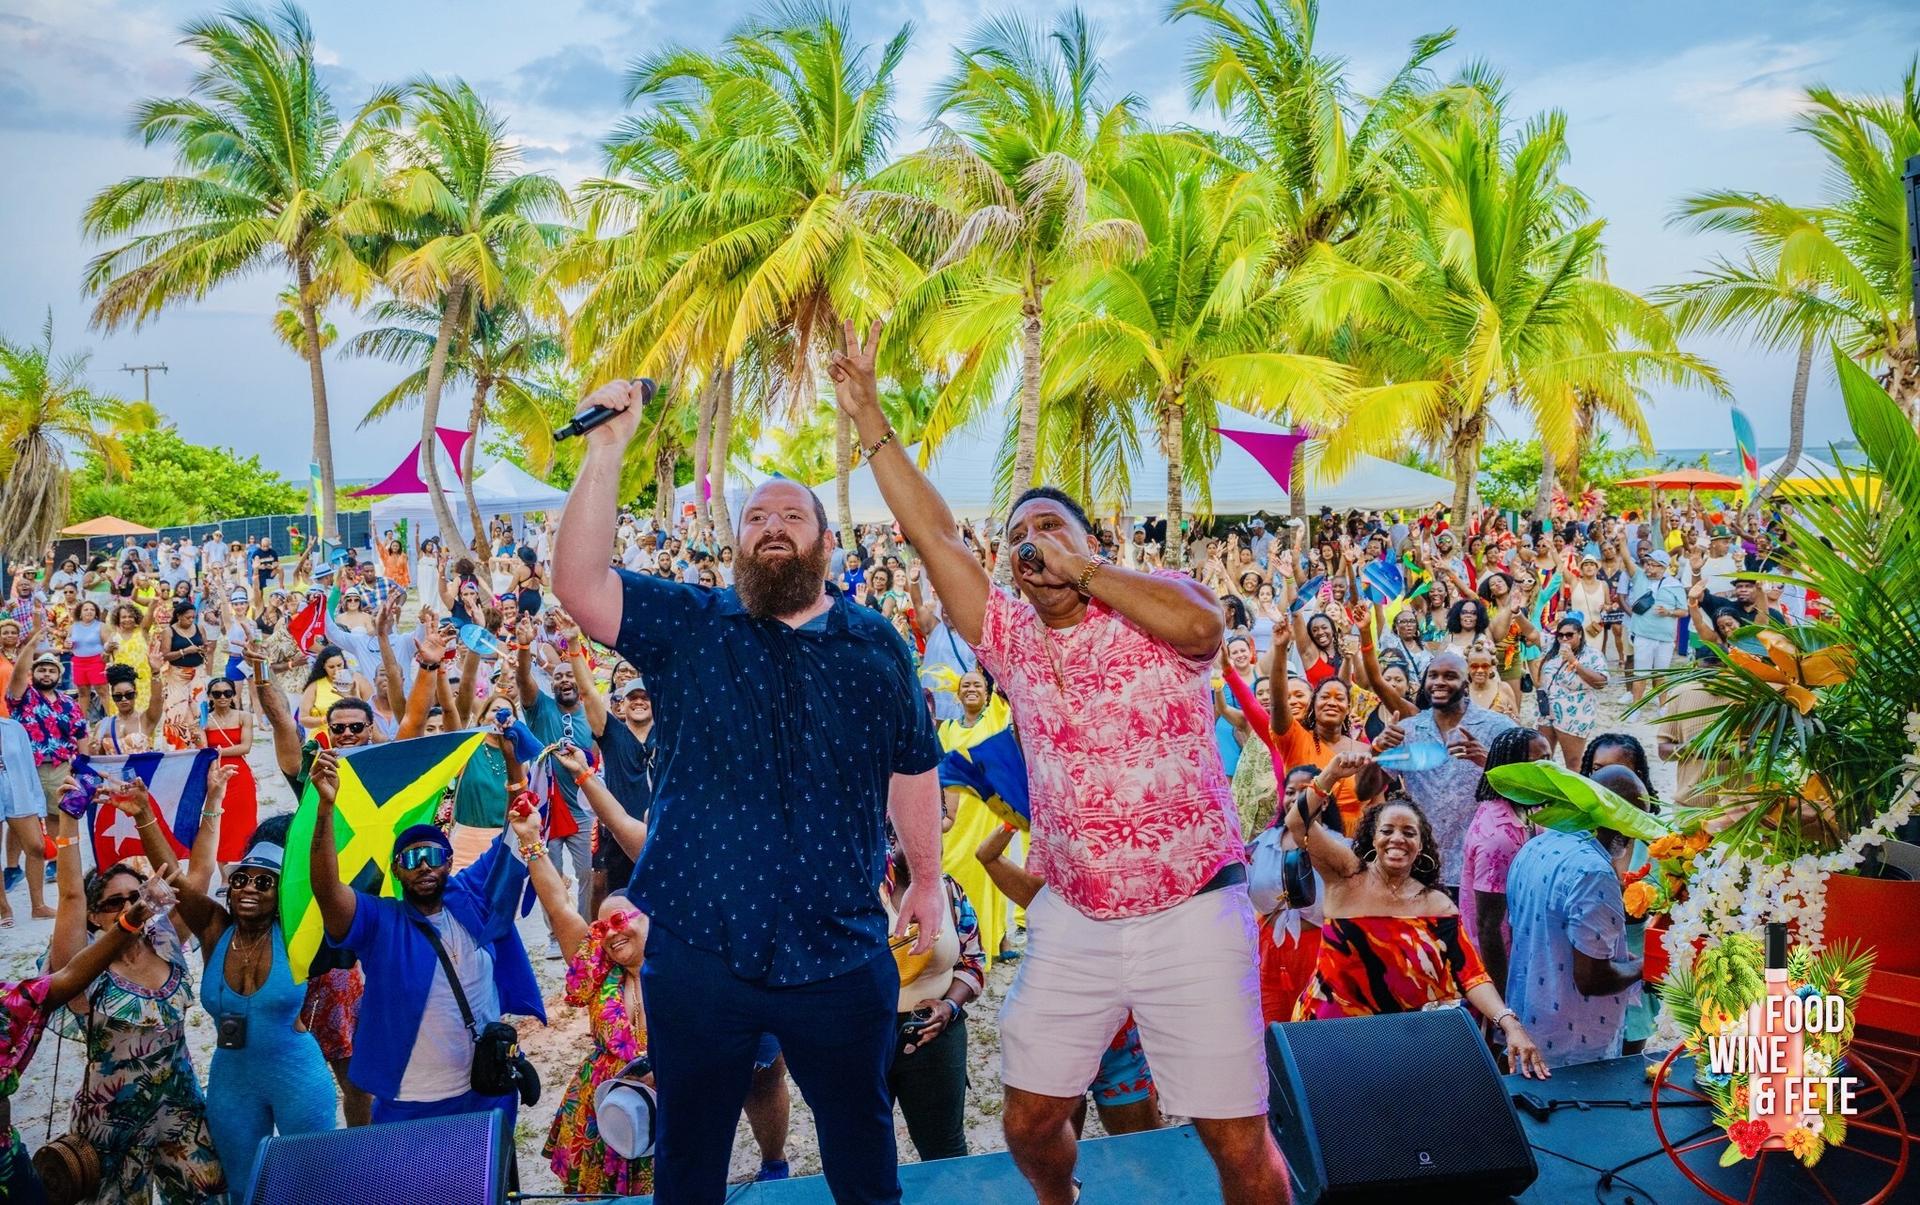 Vanessa James Media Celebrates the Return of Food, Wine, and Fete: Miami's Premium All-Inclusive Soca Fete Experience Celebrating the Caribbean Diaspora